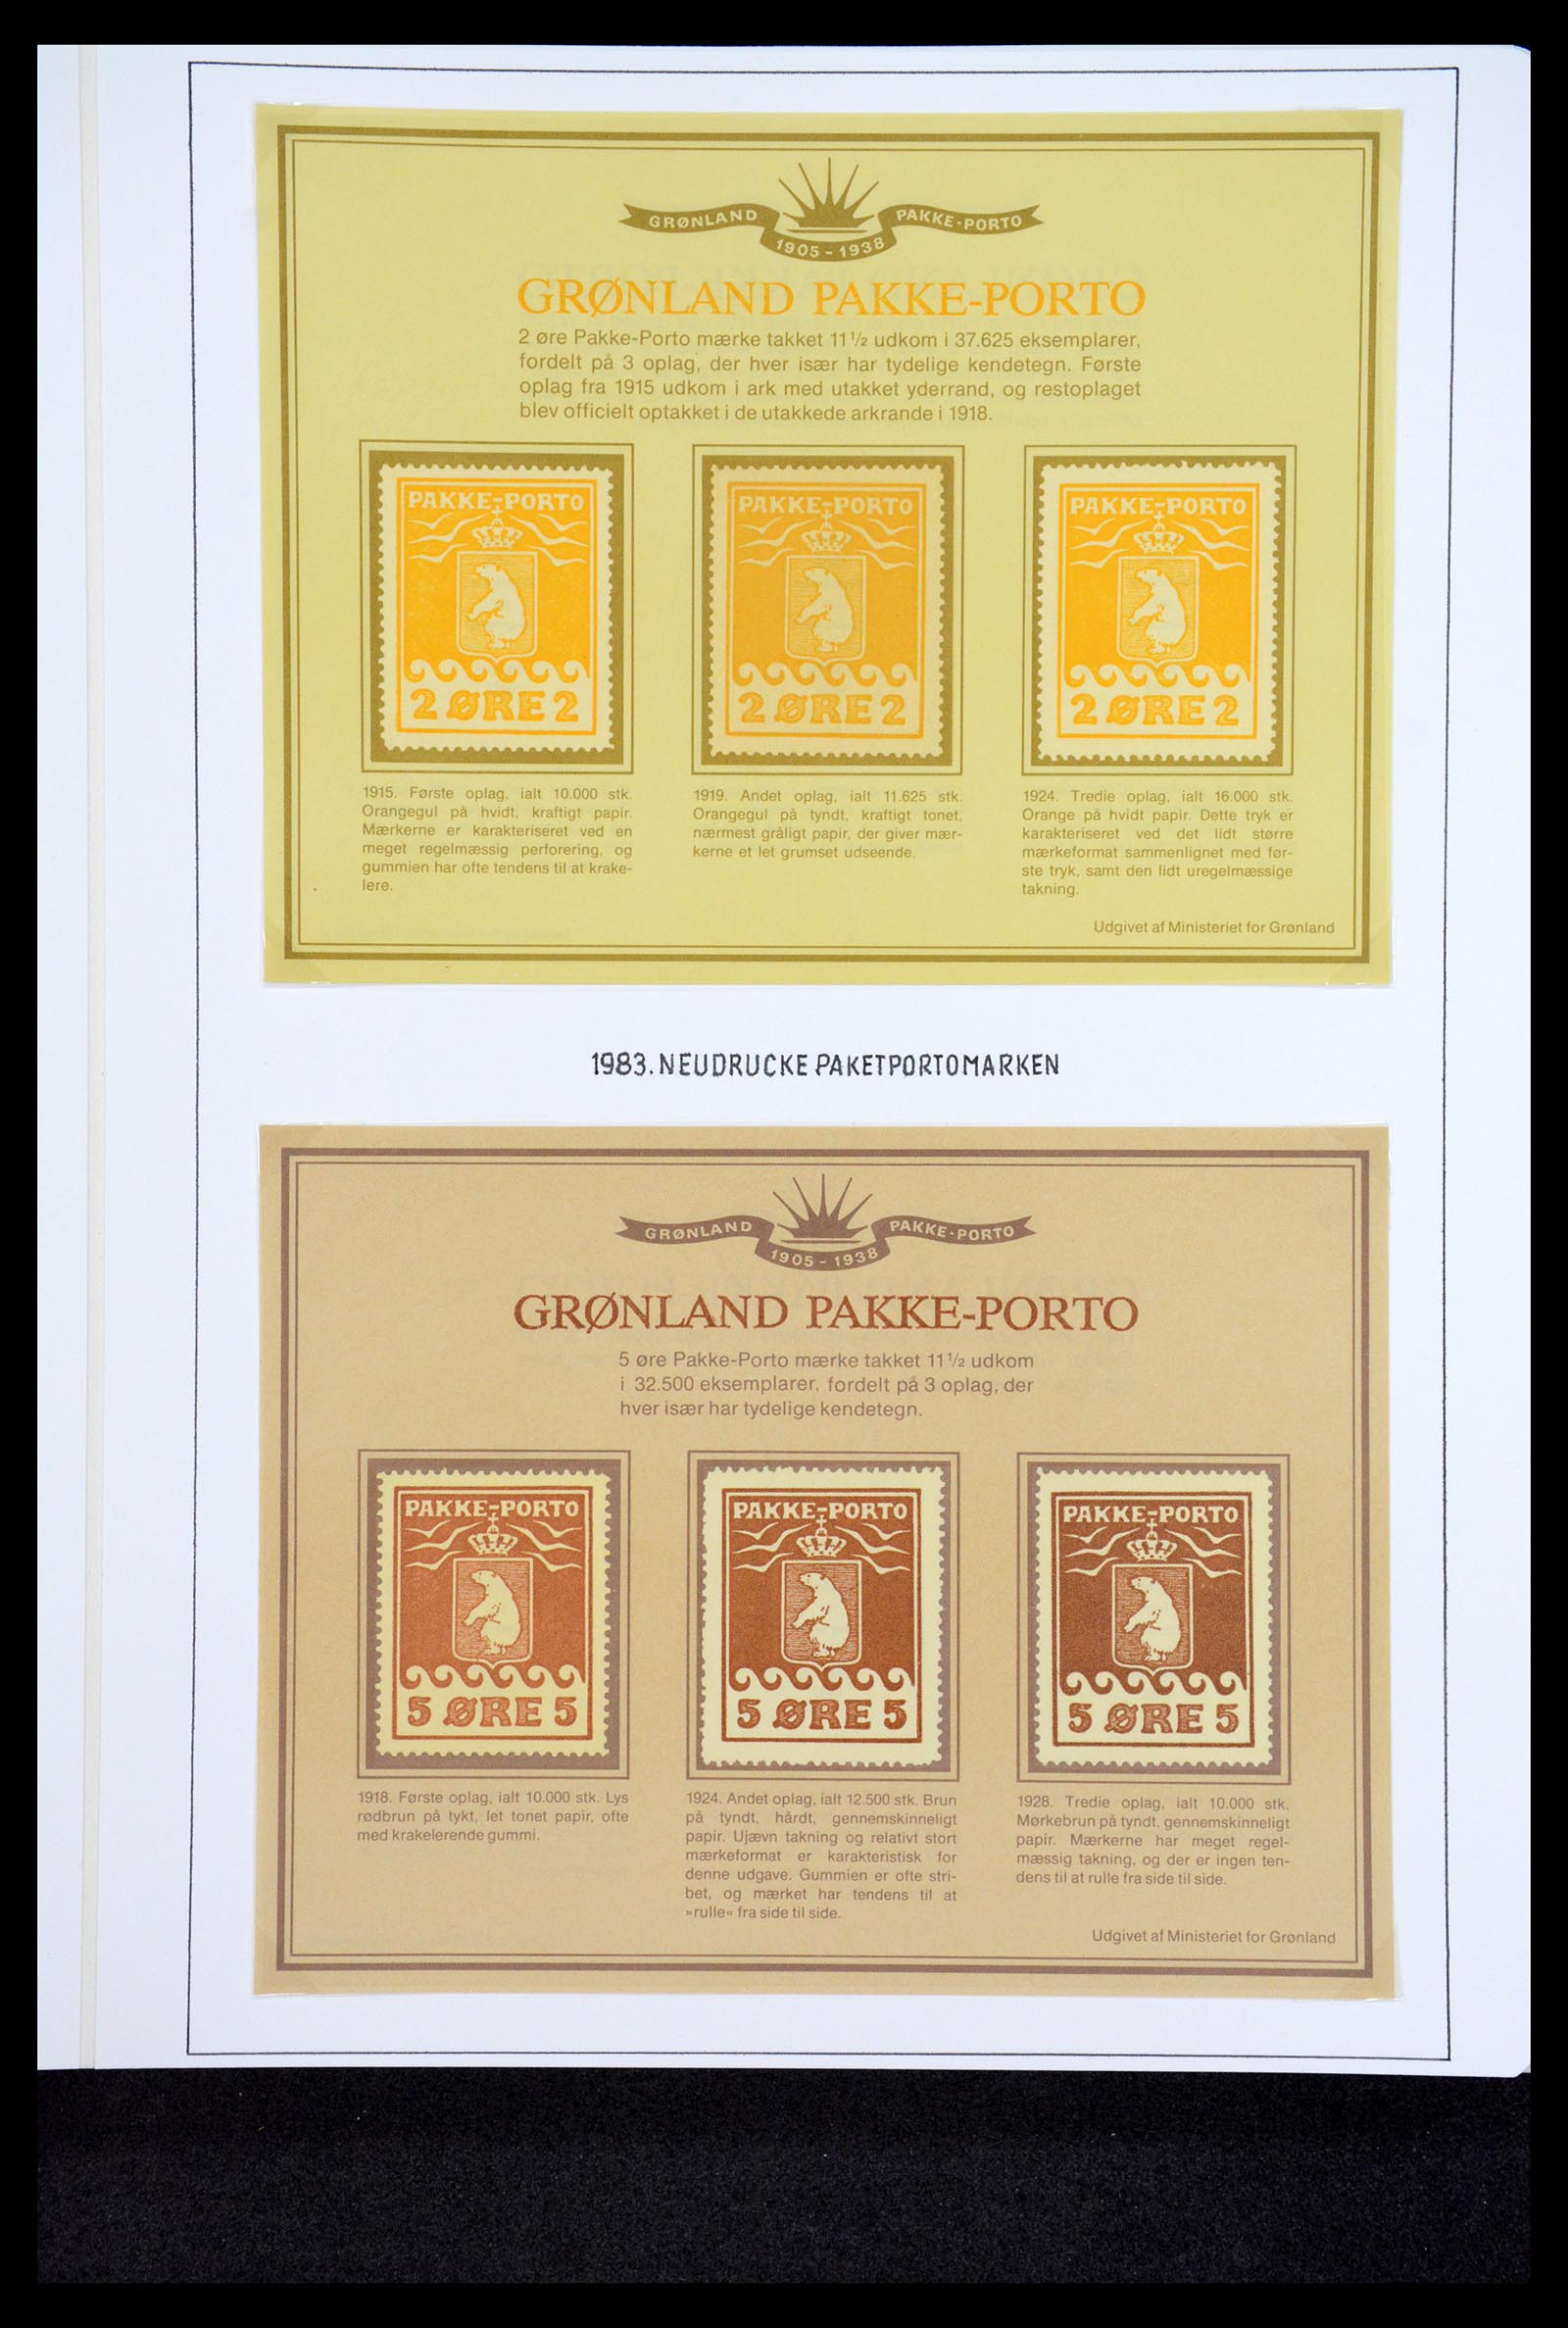 36748 012 - Stamp collection 36748 Greenland pakke-porto 1905-1930.